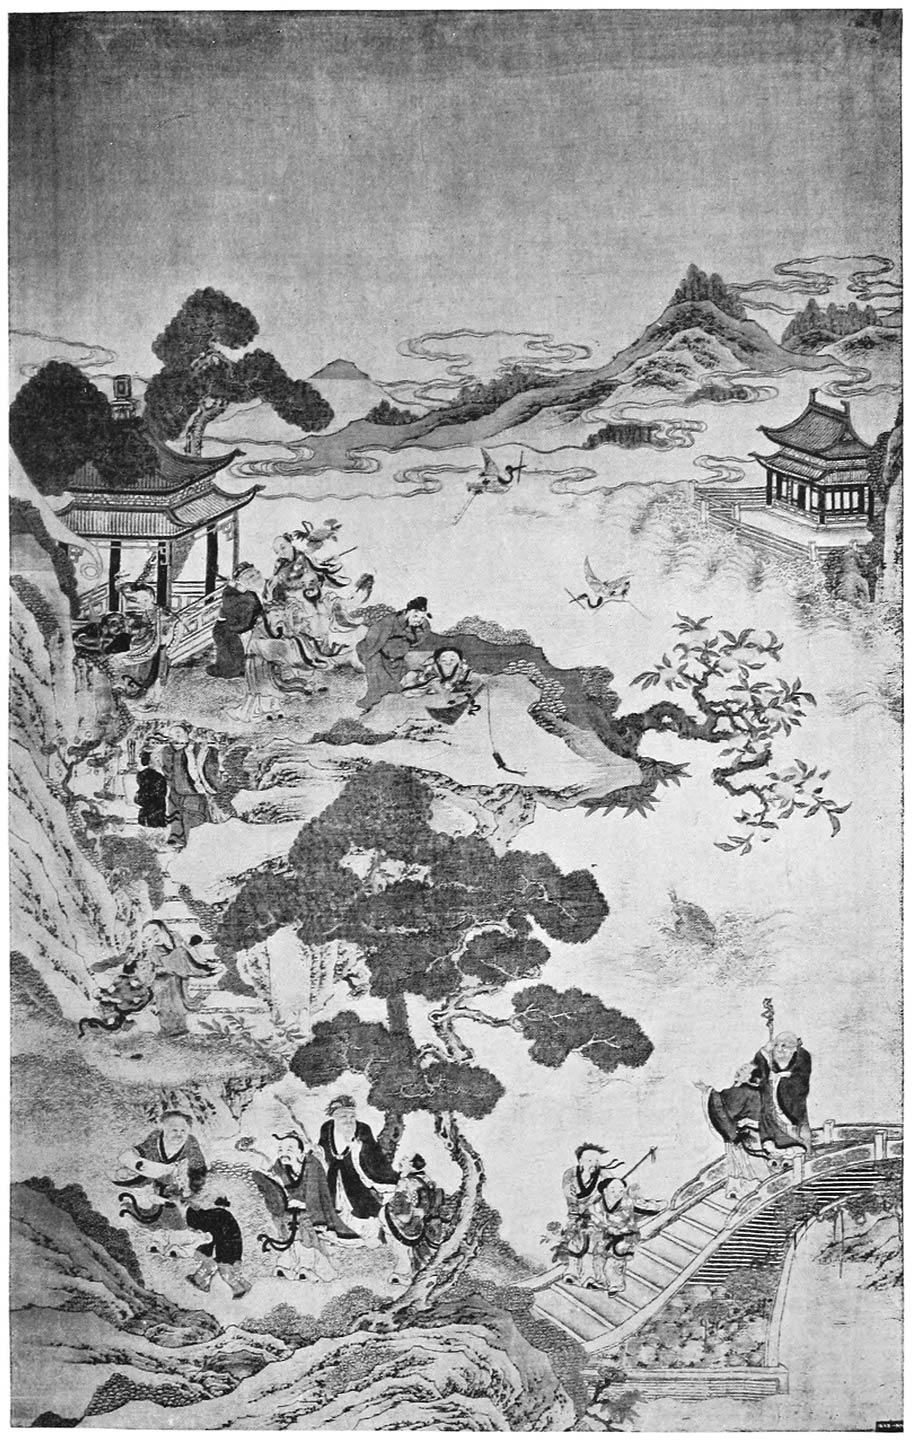 SHOU SHAN (i.e. “HILLS OF LONGEVITY”), THE TAOIST PARADISE